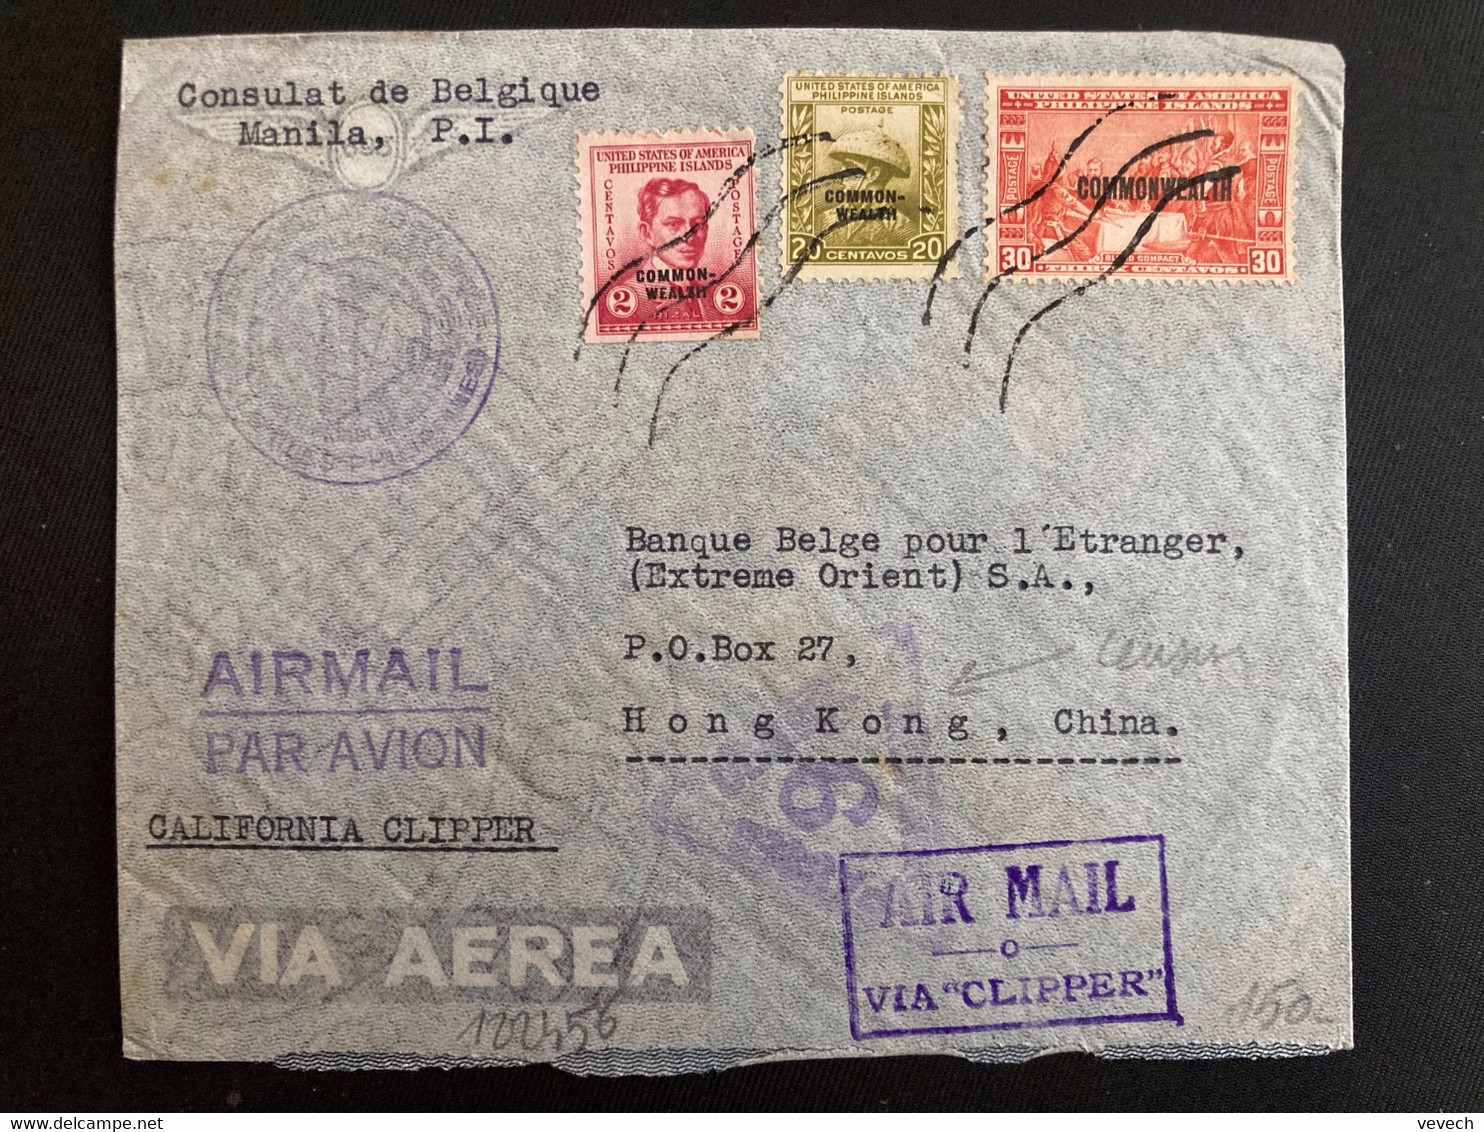 LETTRE Par Avion Via CALIFORNIA CLIPPER Pour HONG KONG CHINE TP 2 + 20 + 30 Surch. COMMONWEALTH OBL. +SEP 20 1940 MANILA - Filippine